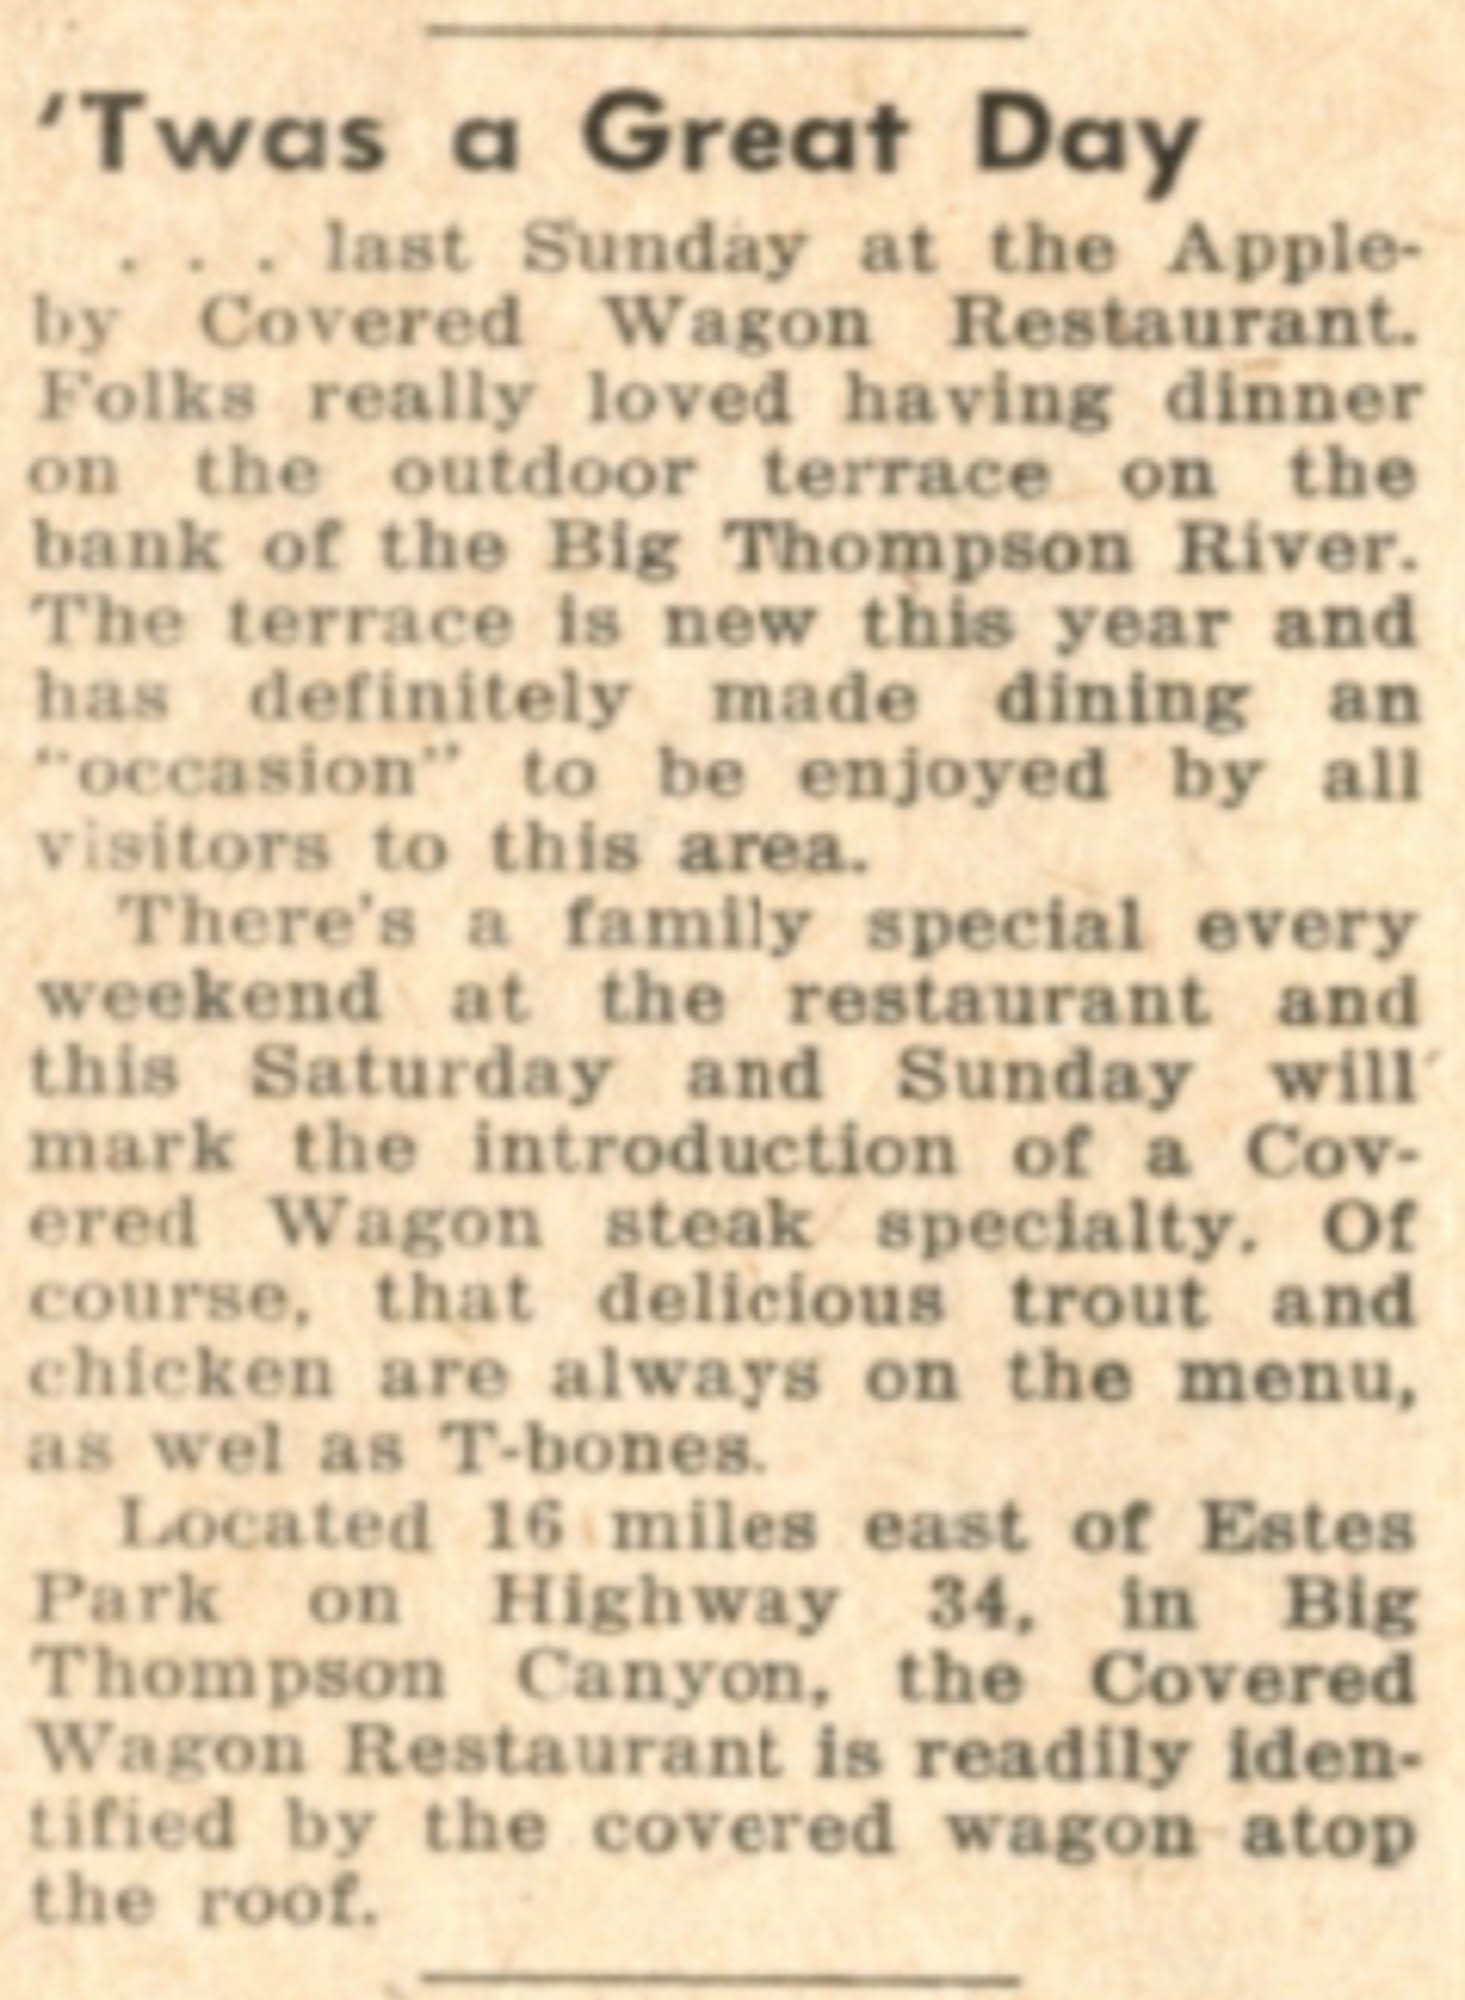 Idlewild Lodge - idlewildlodge.github.io - 1956-06-29 - The Estes Park Trail - Covered Wagon Restaurant Advertisement